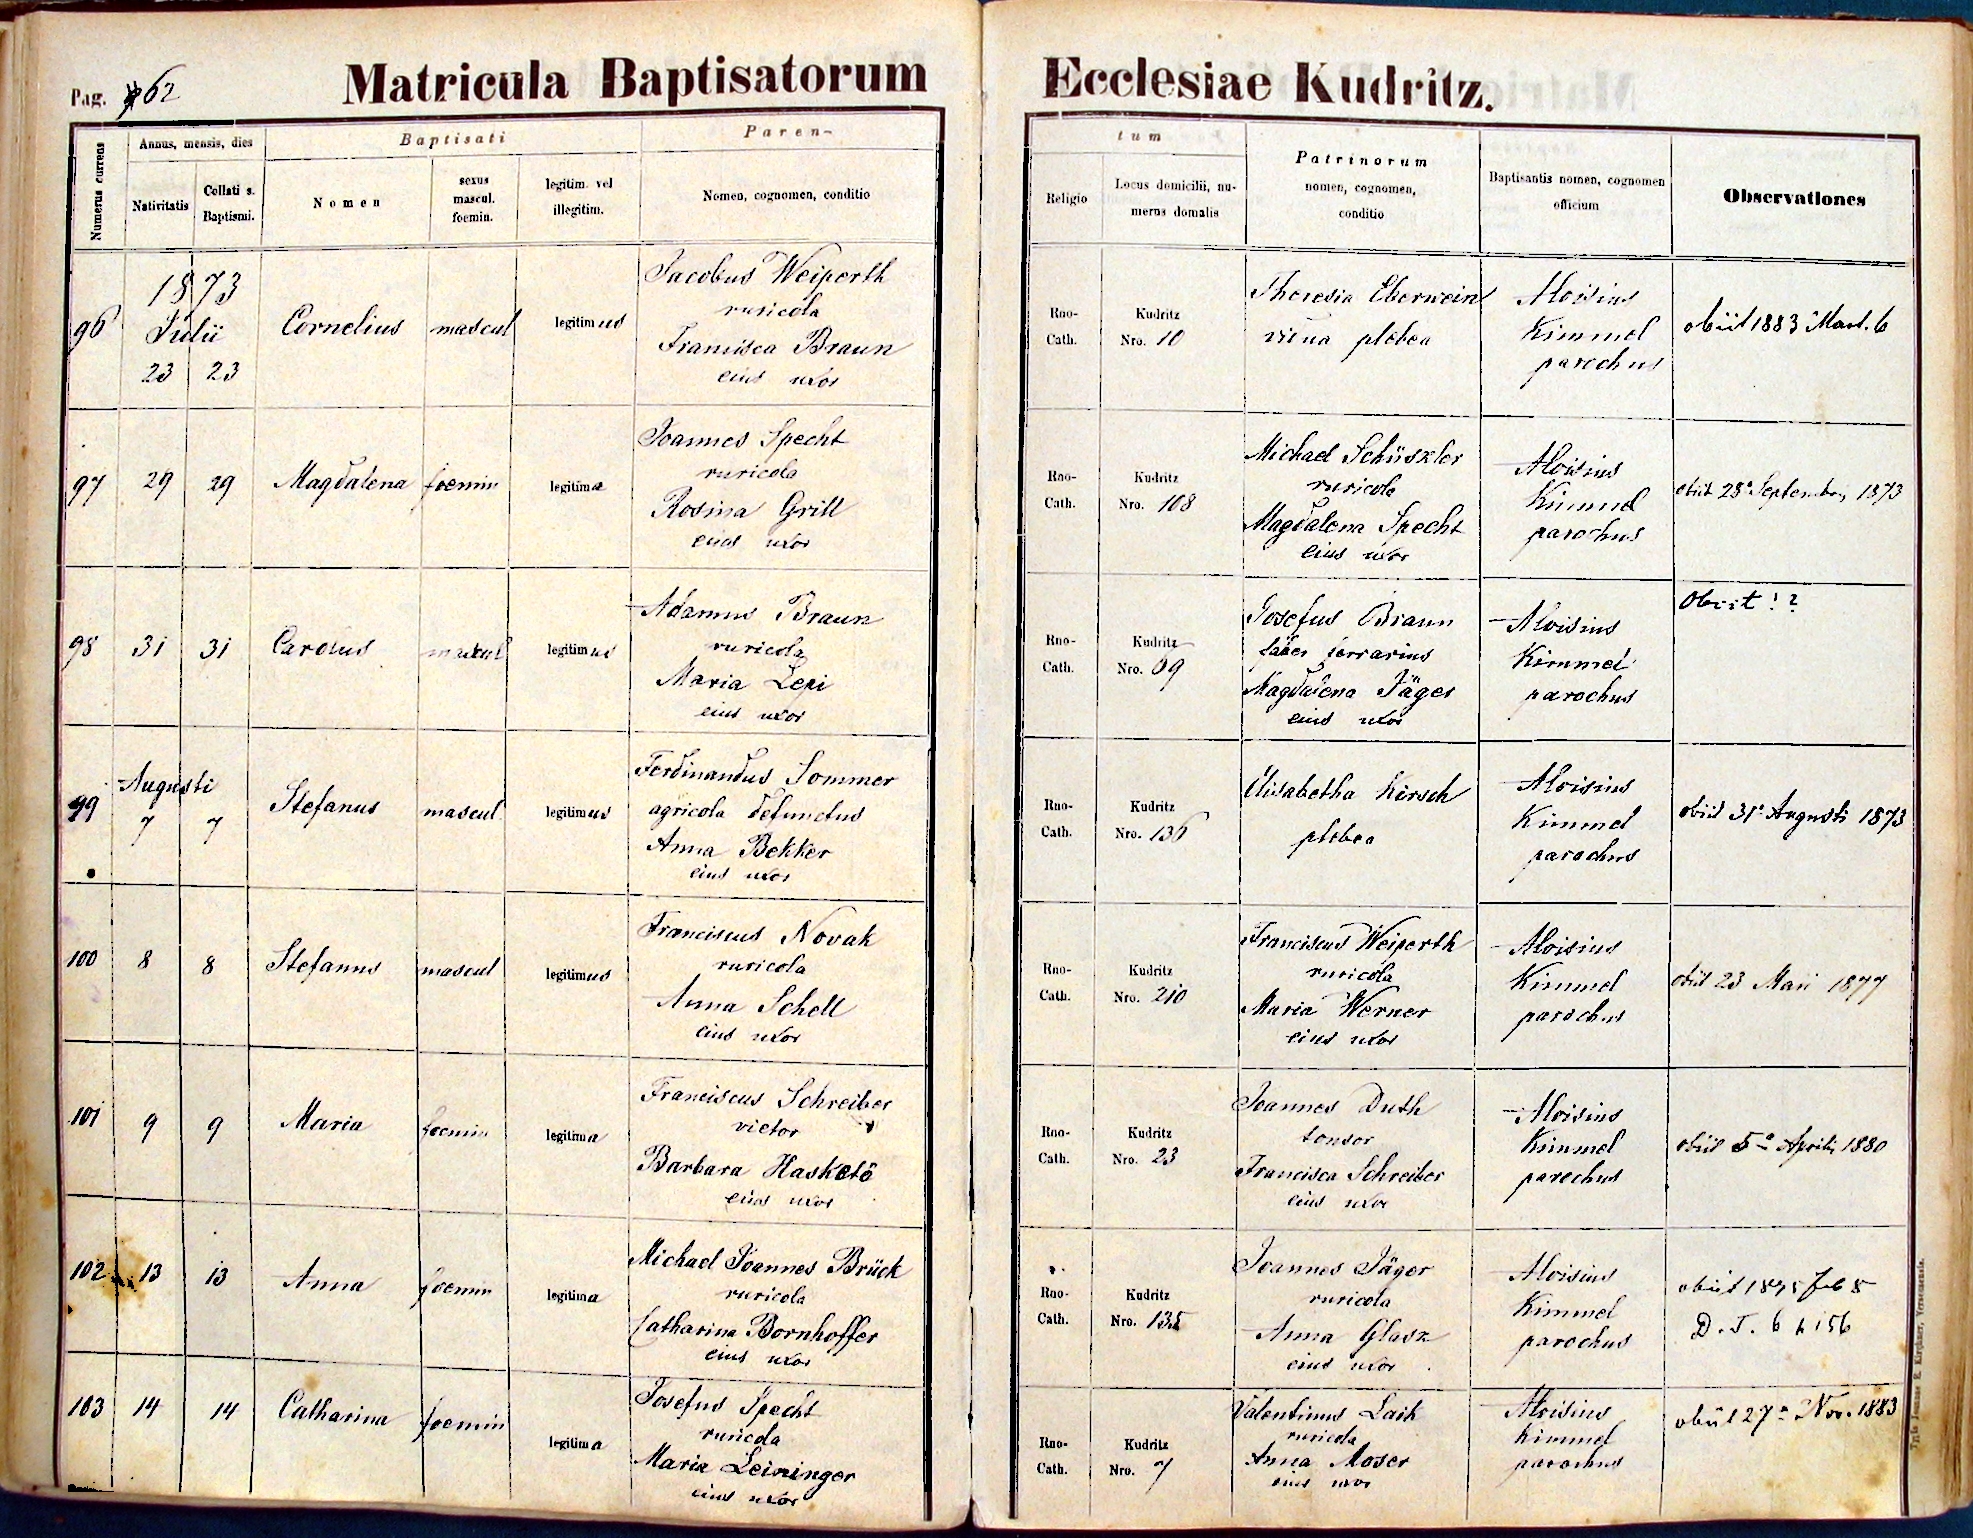 images/church_records/BIRTHS/1884-1899B/1887/062